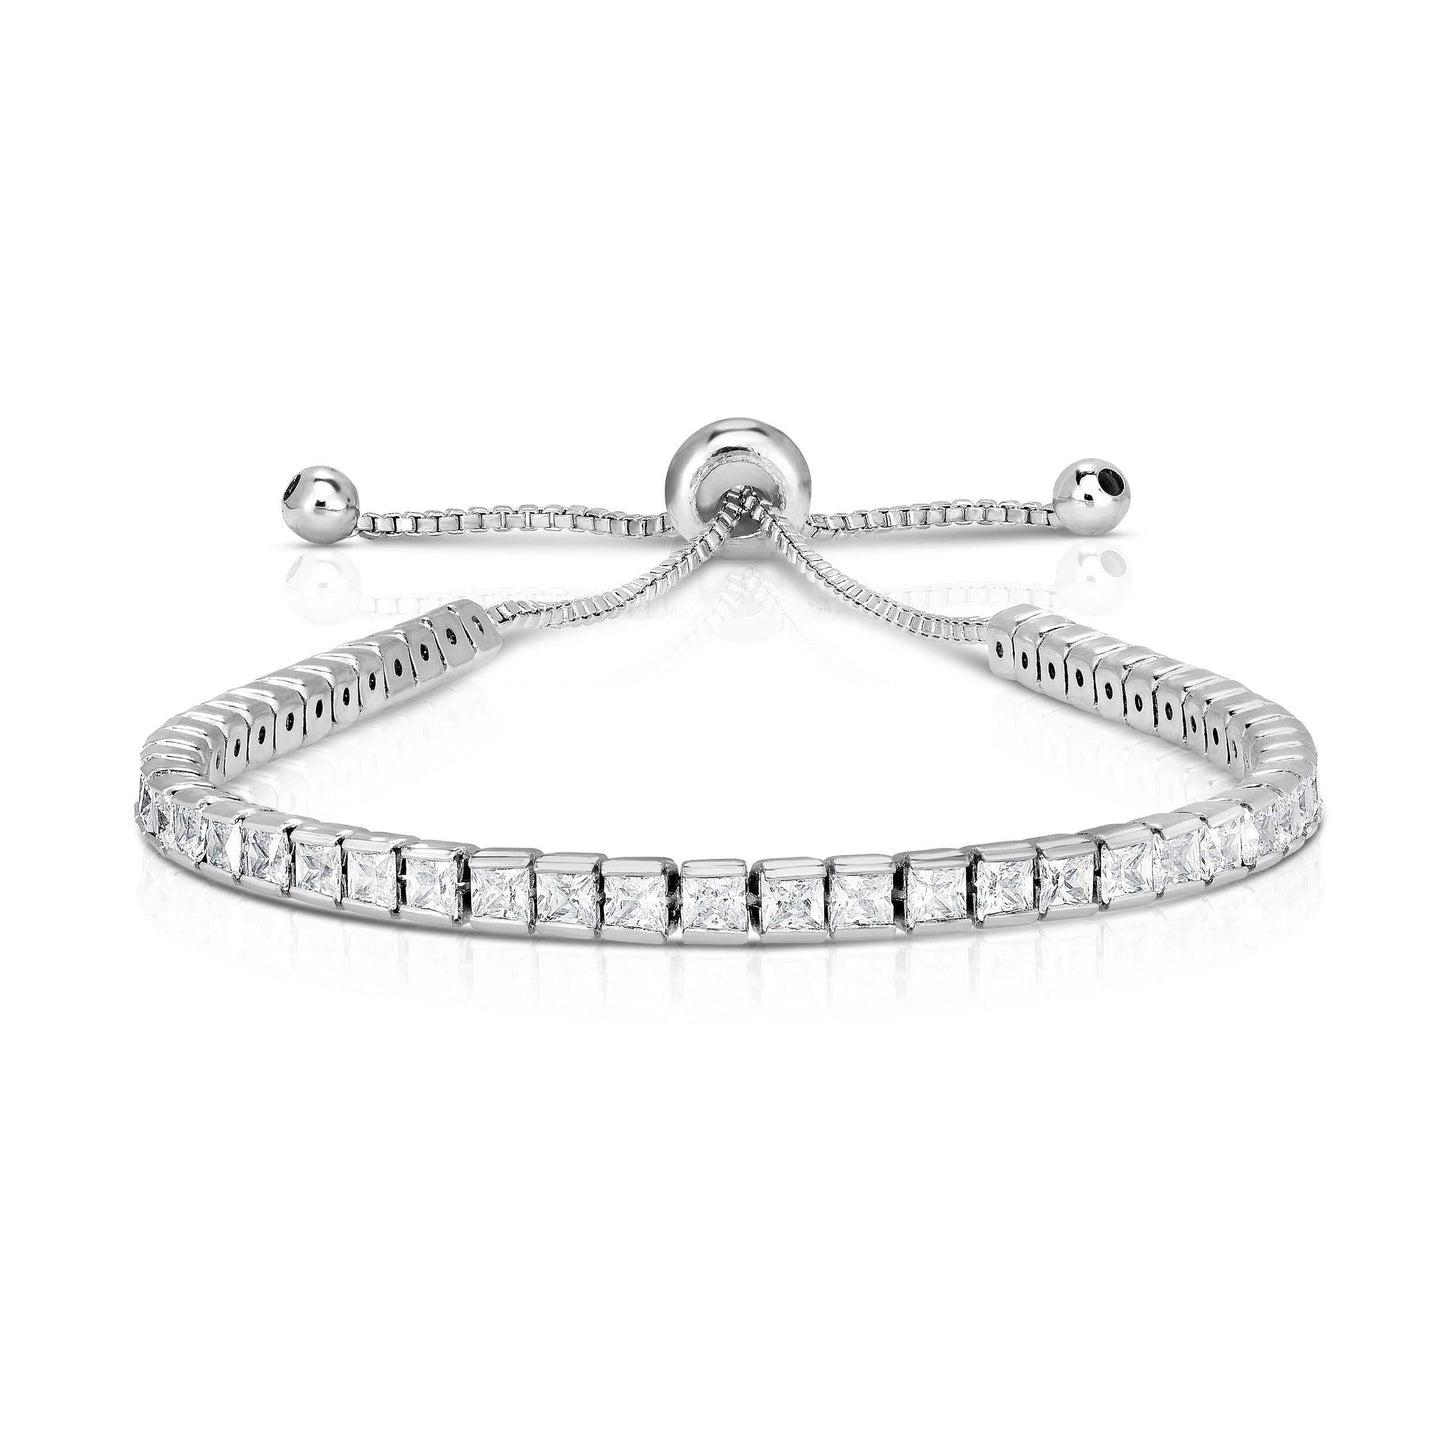 Silver Adjustable Princess-Cut Tennis Bracelet Made with Swarovski Elements